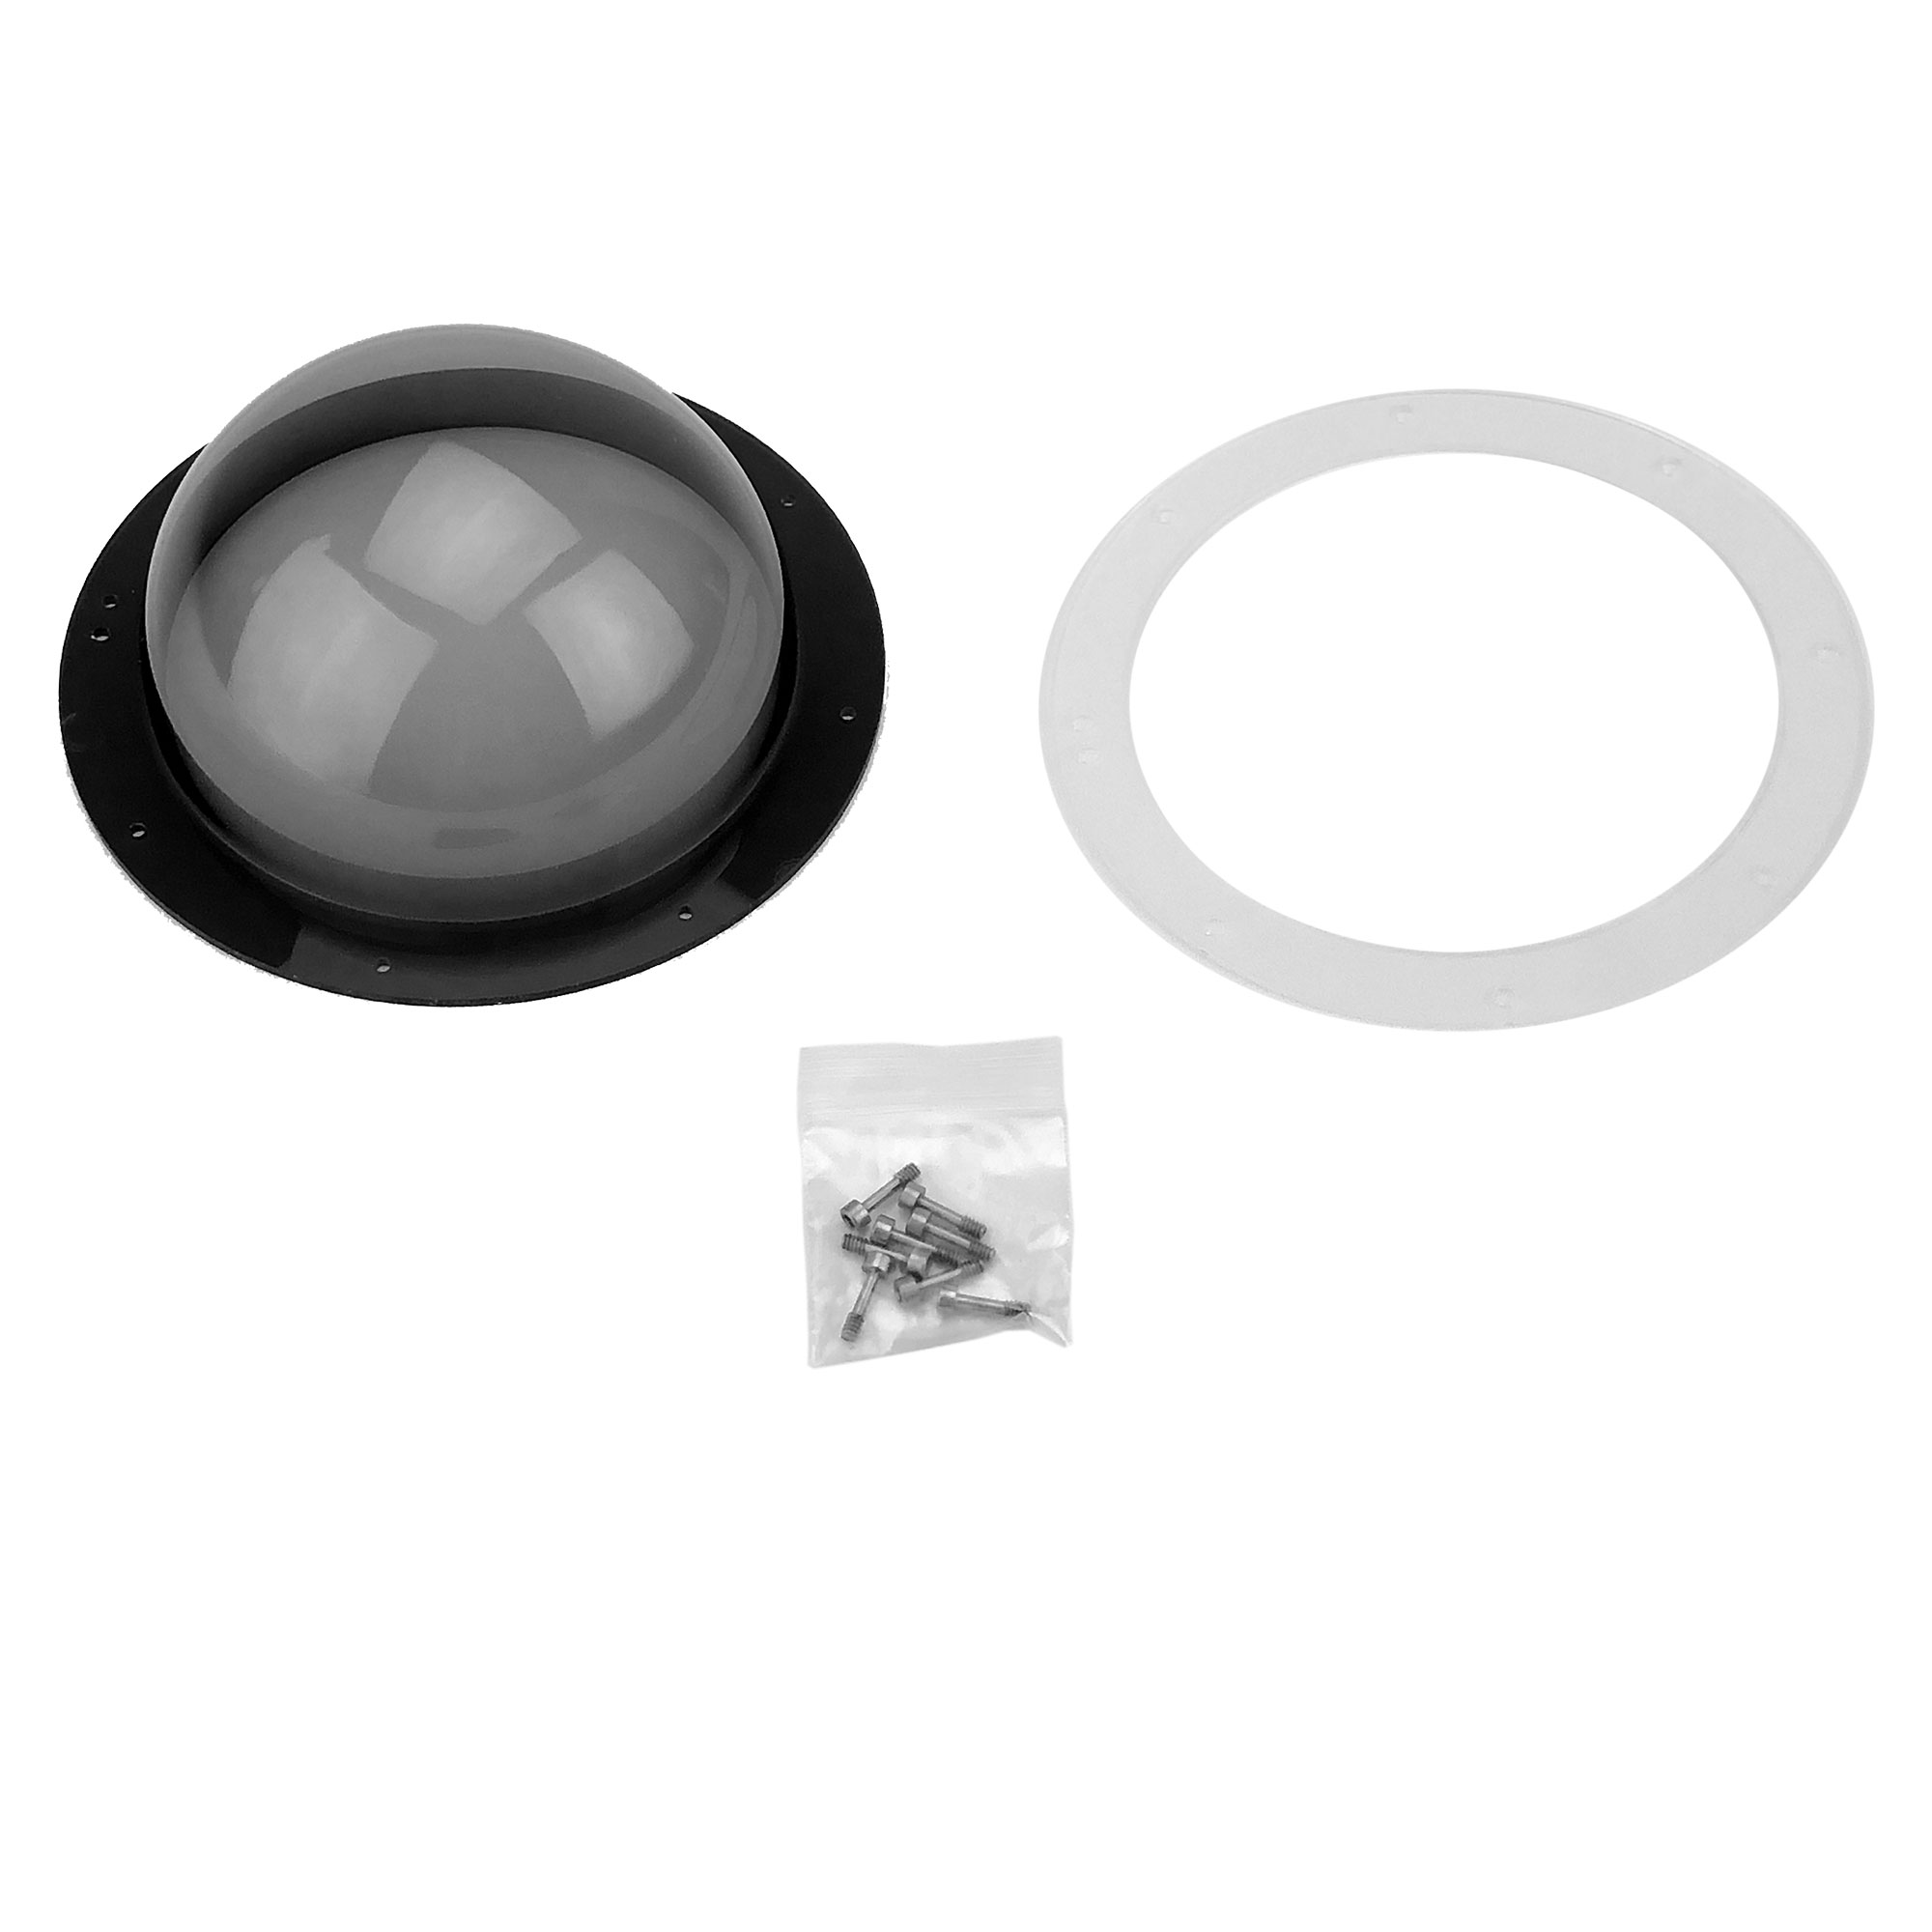 Half Sphere Lens For BASH - Tinted Lens Option (AC-HS-LENS-C)